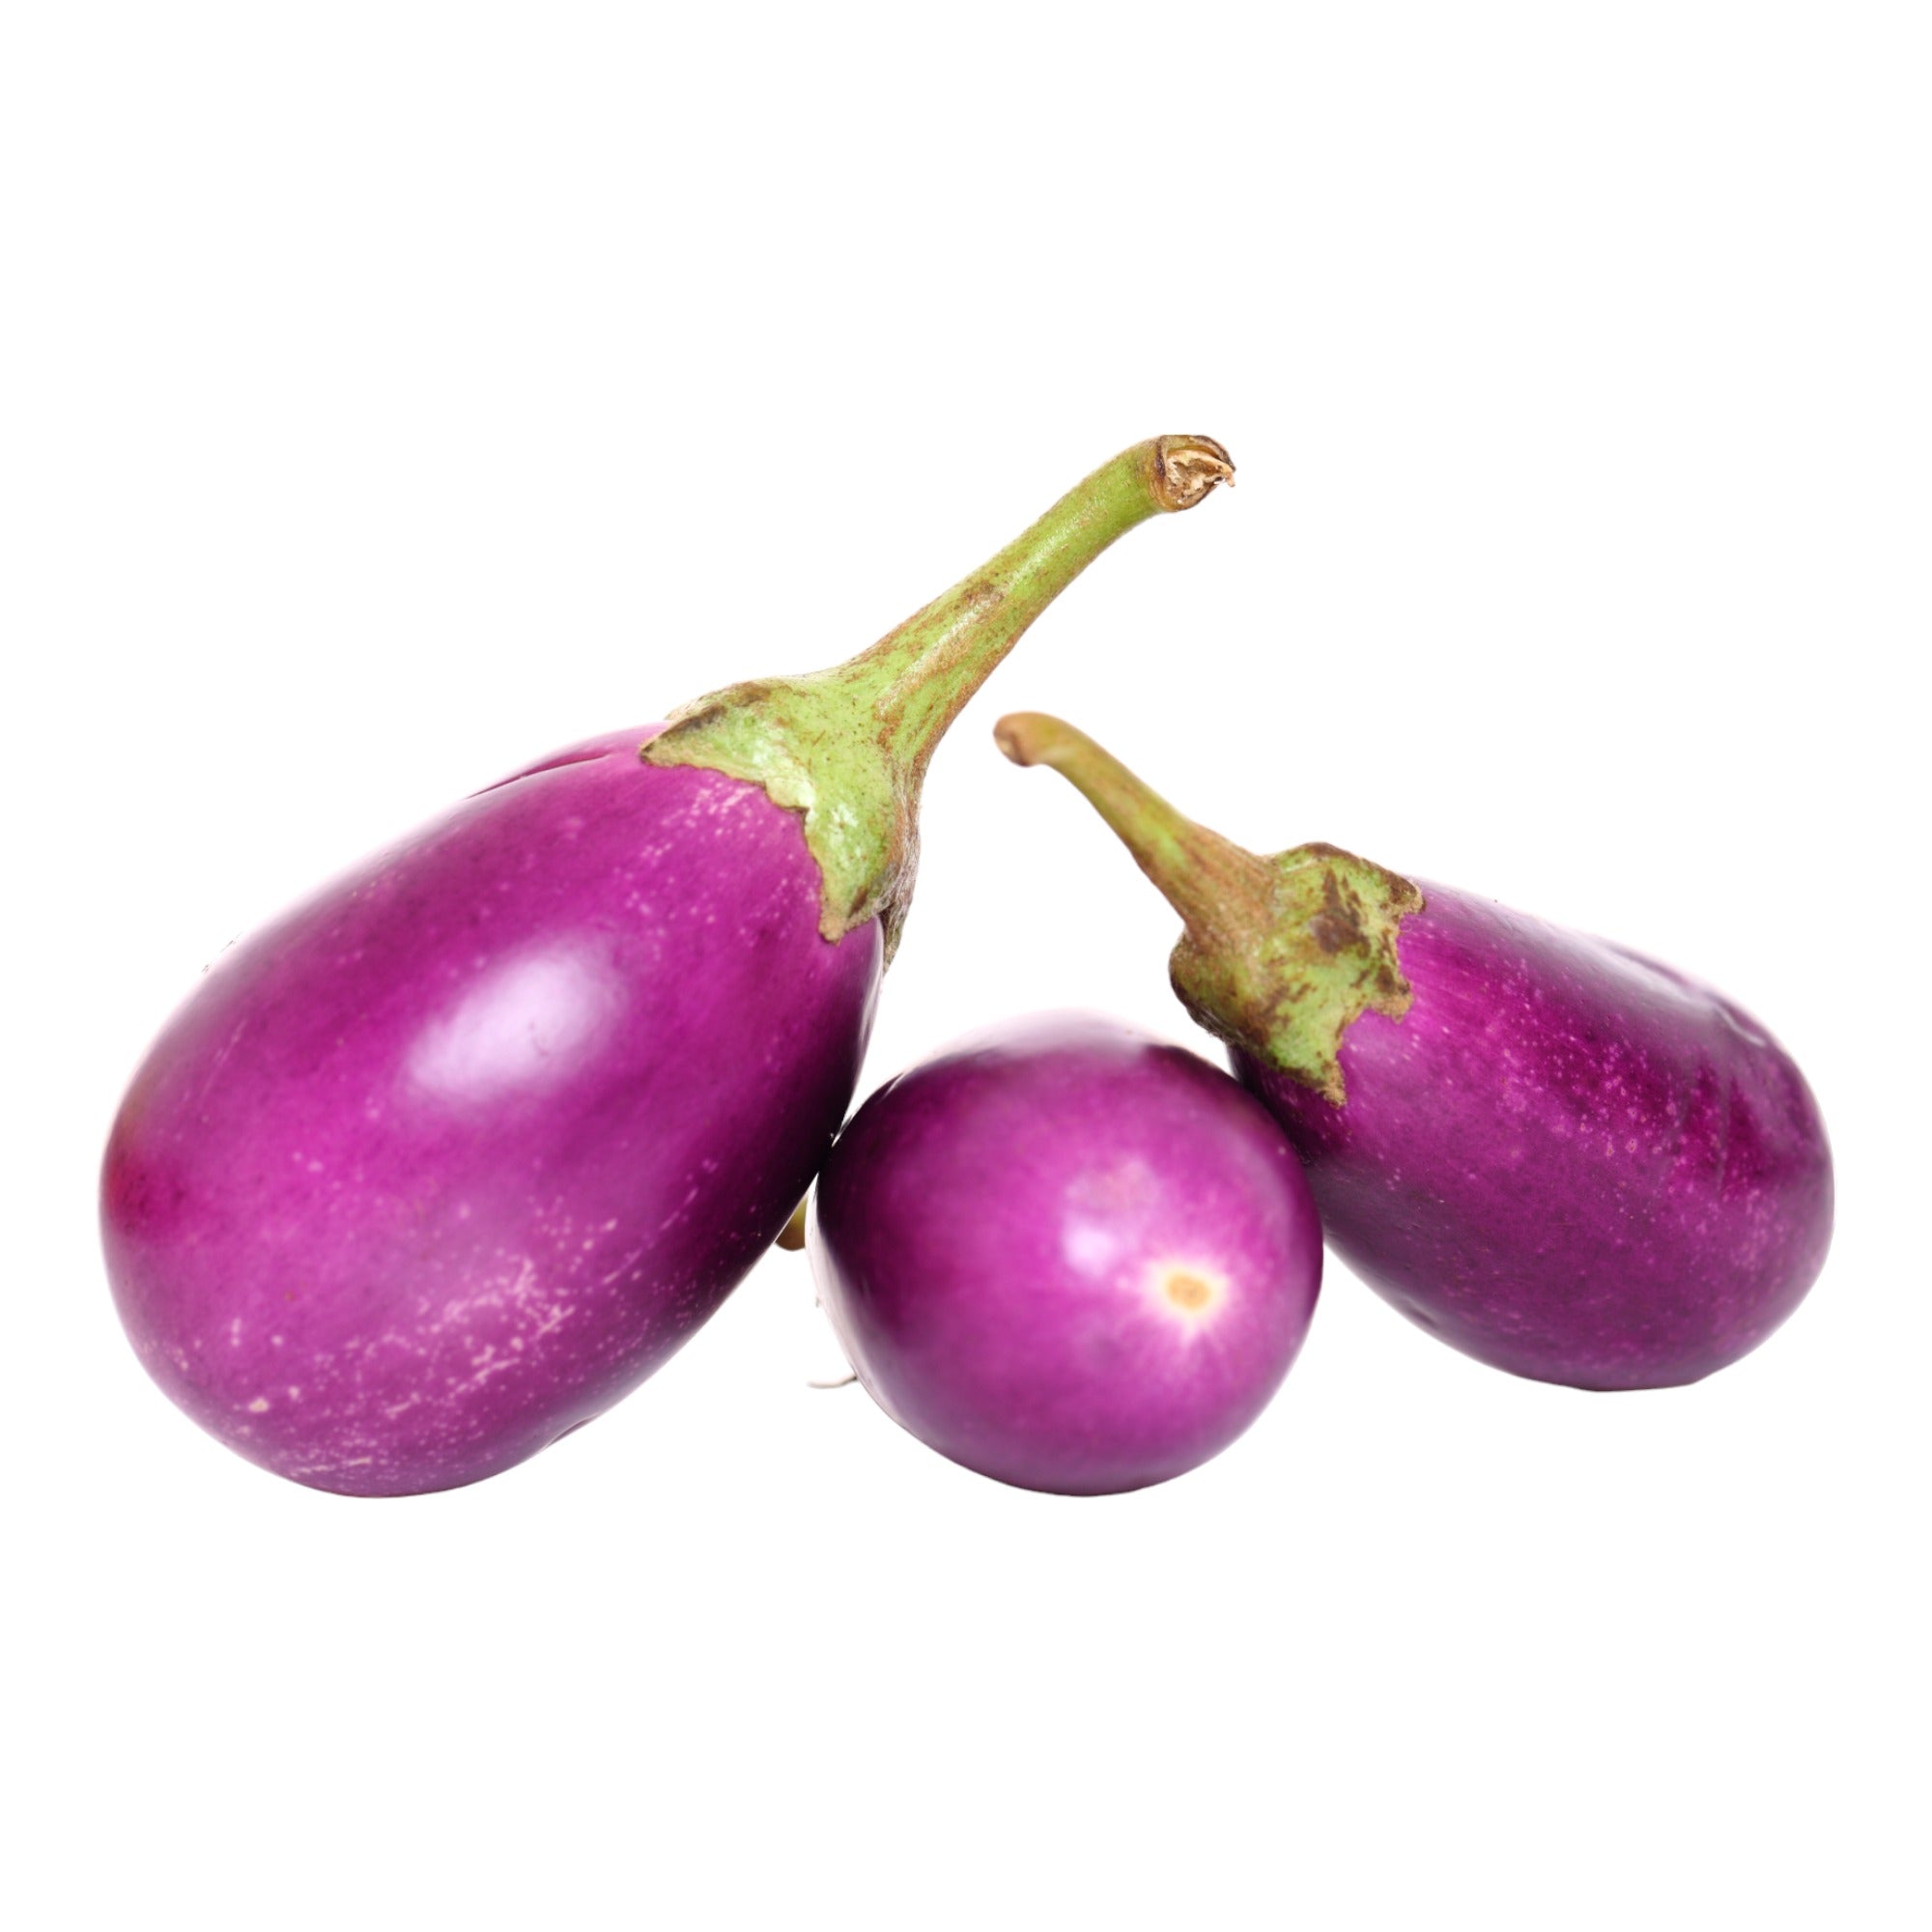 Eggplant - Rosalina F1 seeds